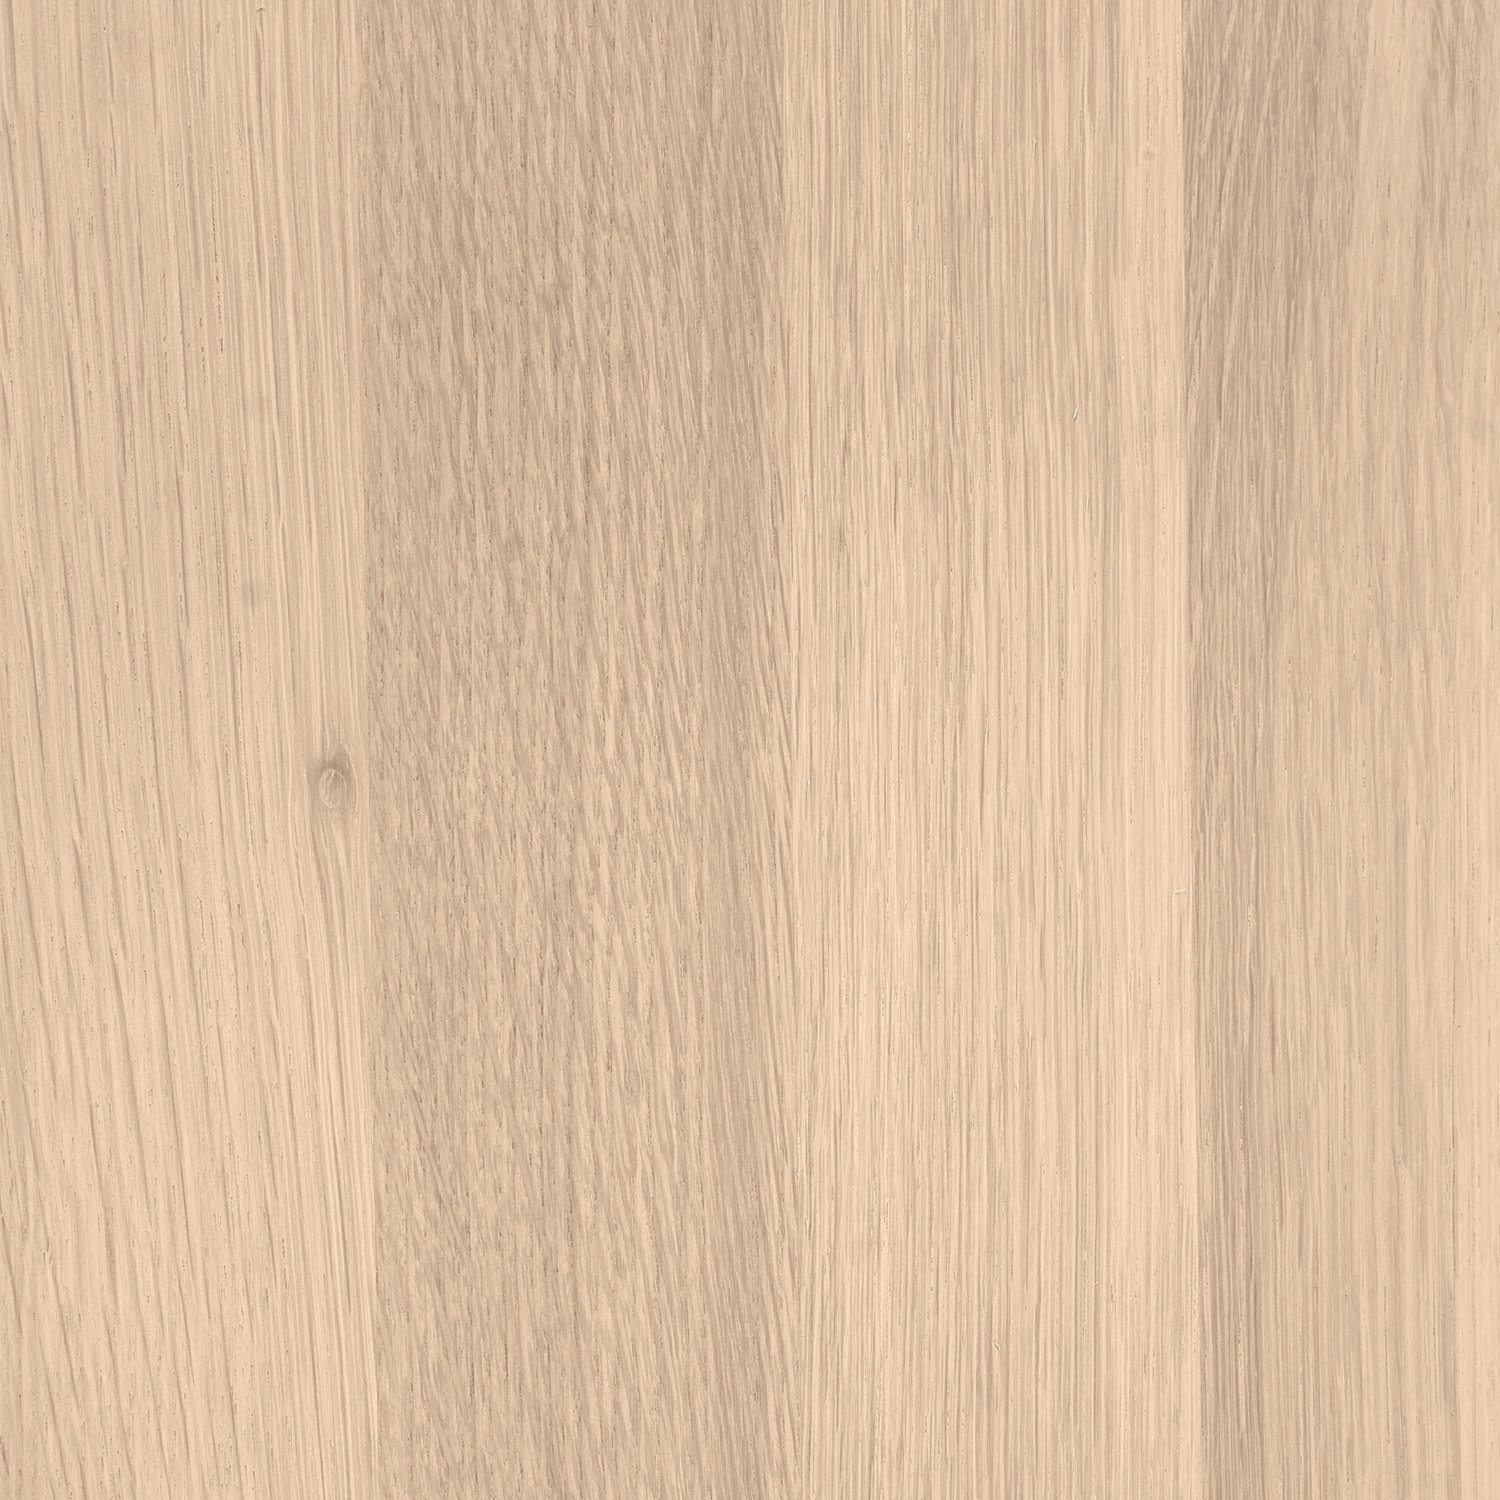  Eiken tafelblad op maat - 2,5 cm dik (1-laag) - foutvrij Europees eikenhout - verlijmd kd 8-12% - 50-120x50-350 cm